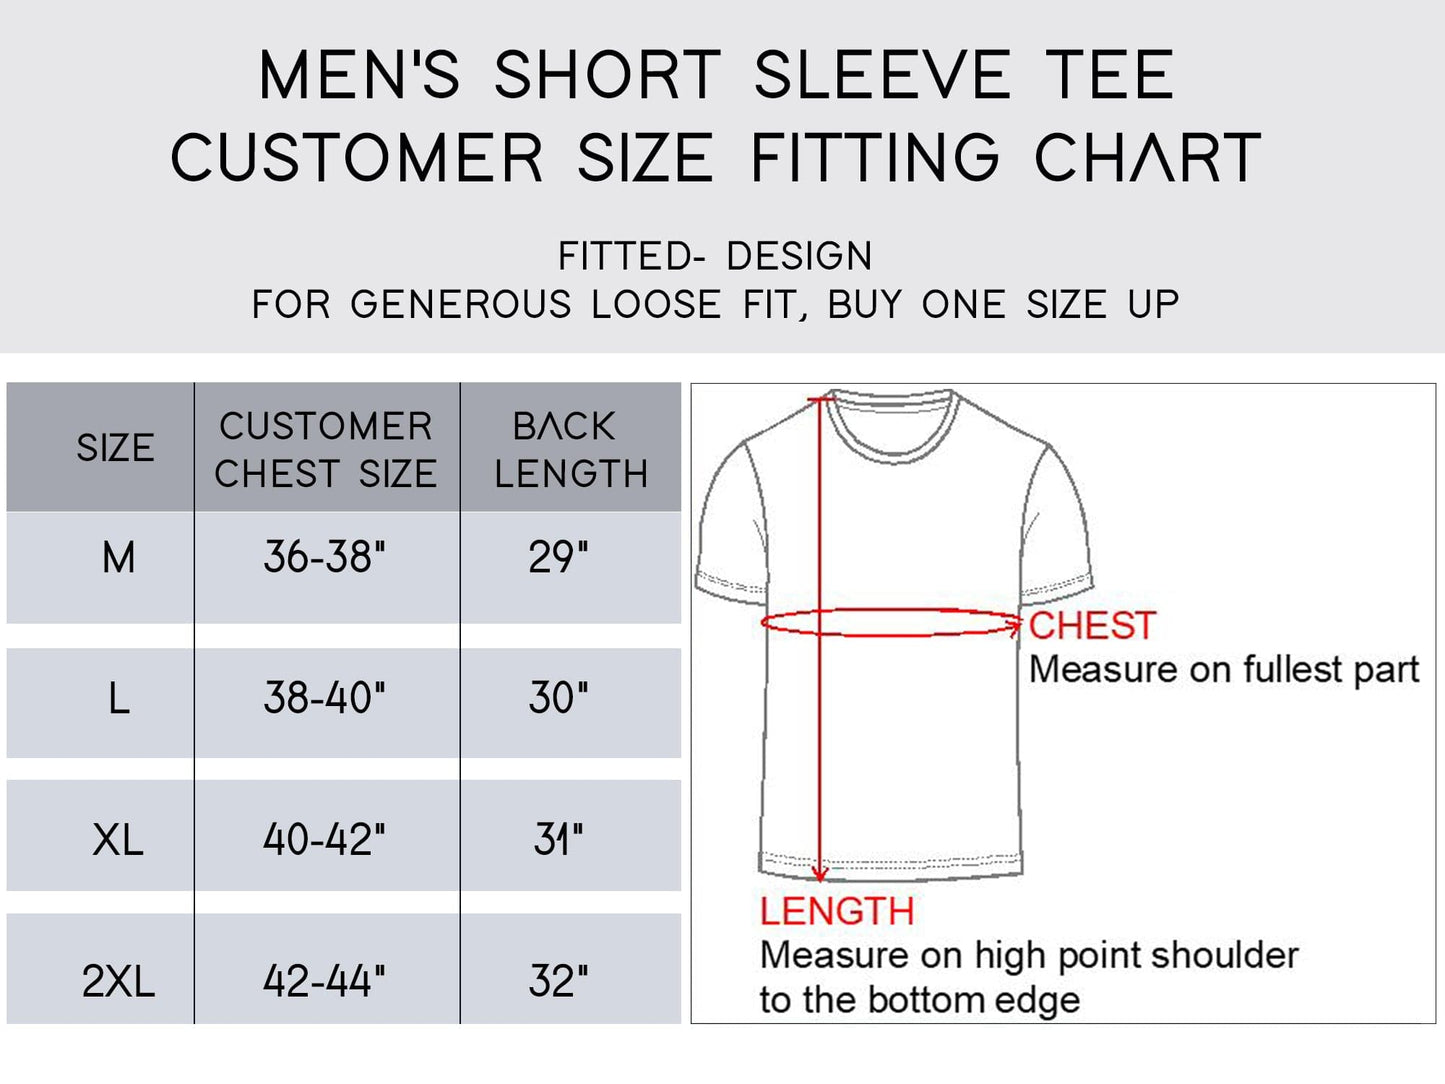 Camiseta clásica de mezcla de algodón de manga corta con cuello redondo para hombre (S-3XL), paquete de 2 